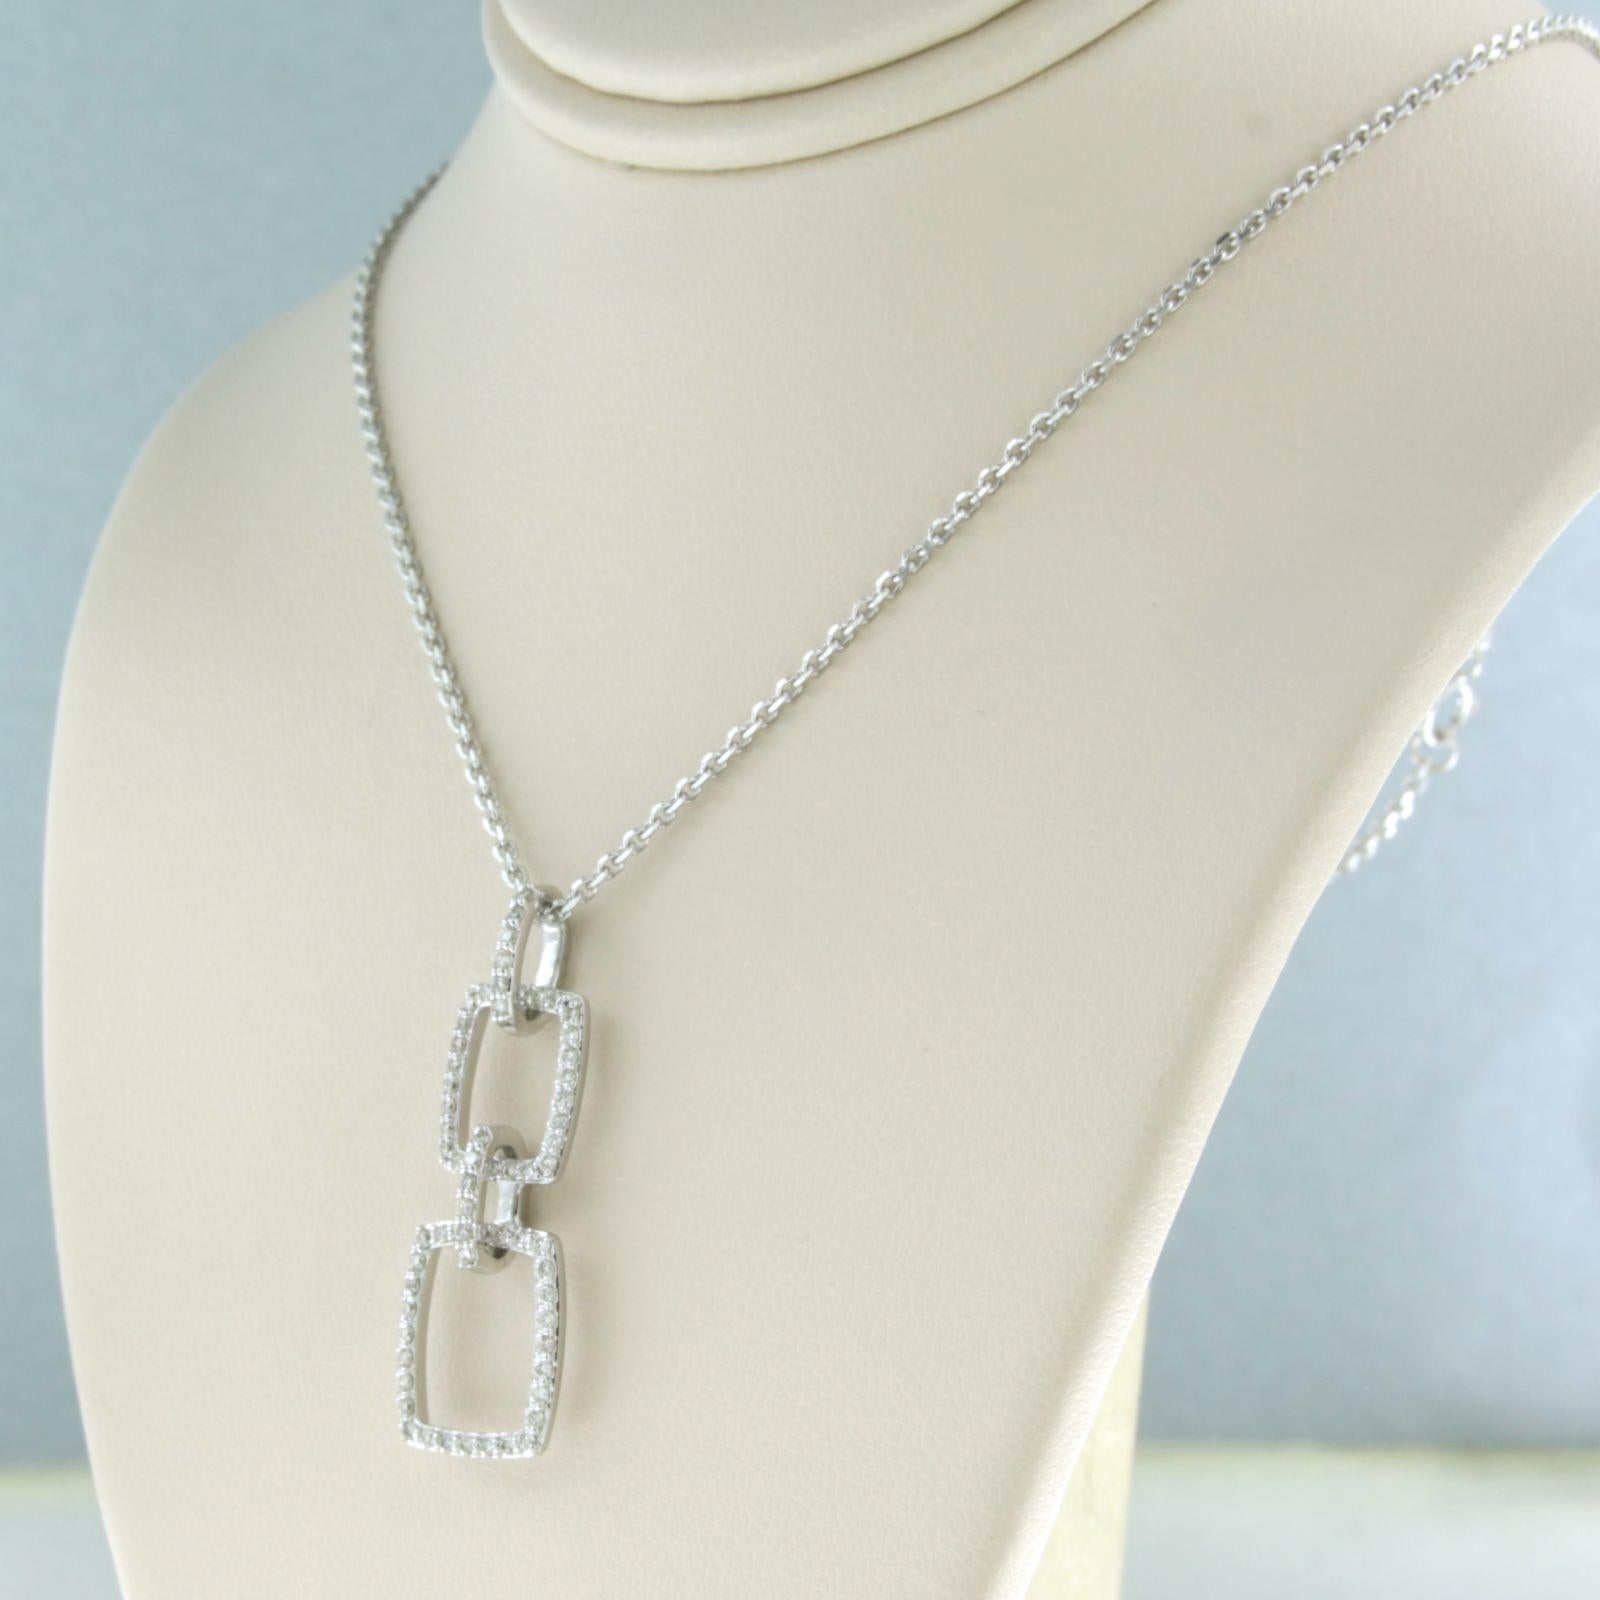 Brilliant Cut Necklace and pendant set with diamonds 18k white gold 40 cm long For Sale